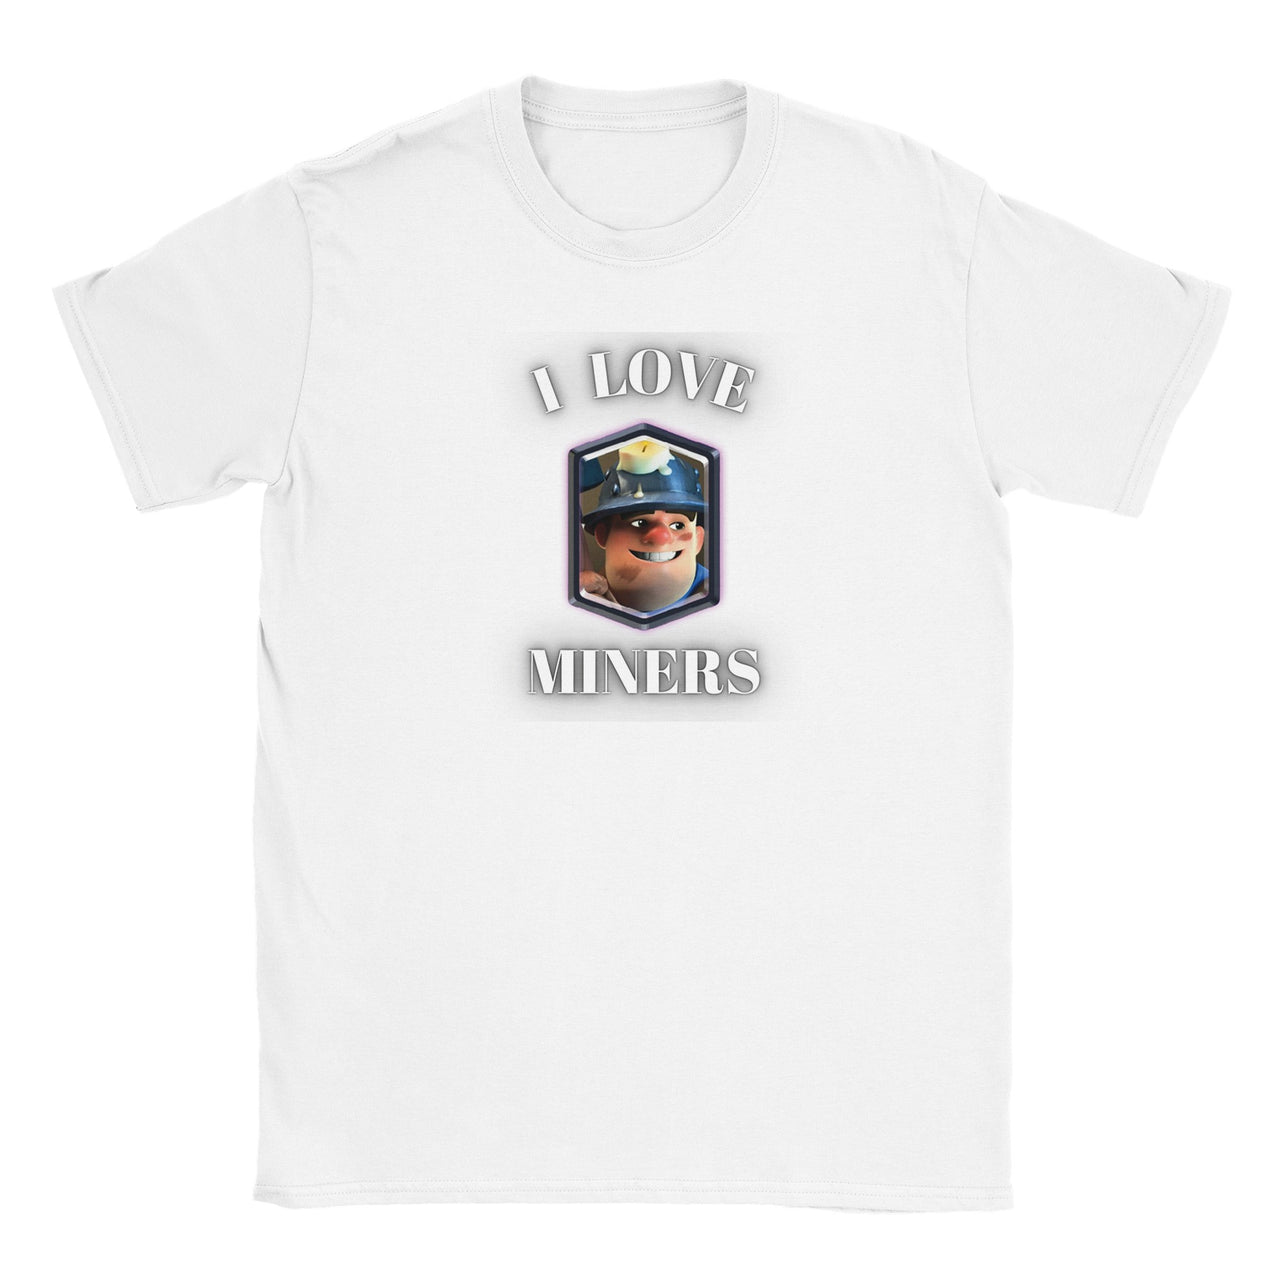 I Love Miners T-shirt